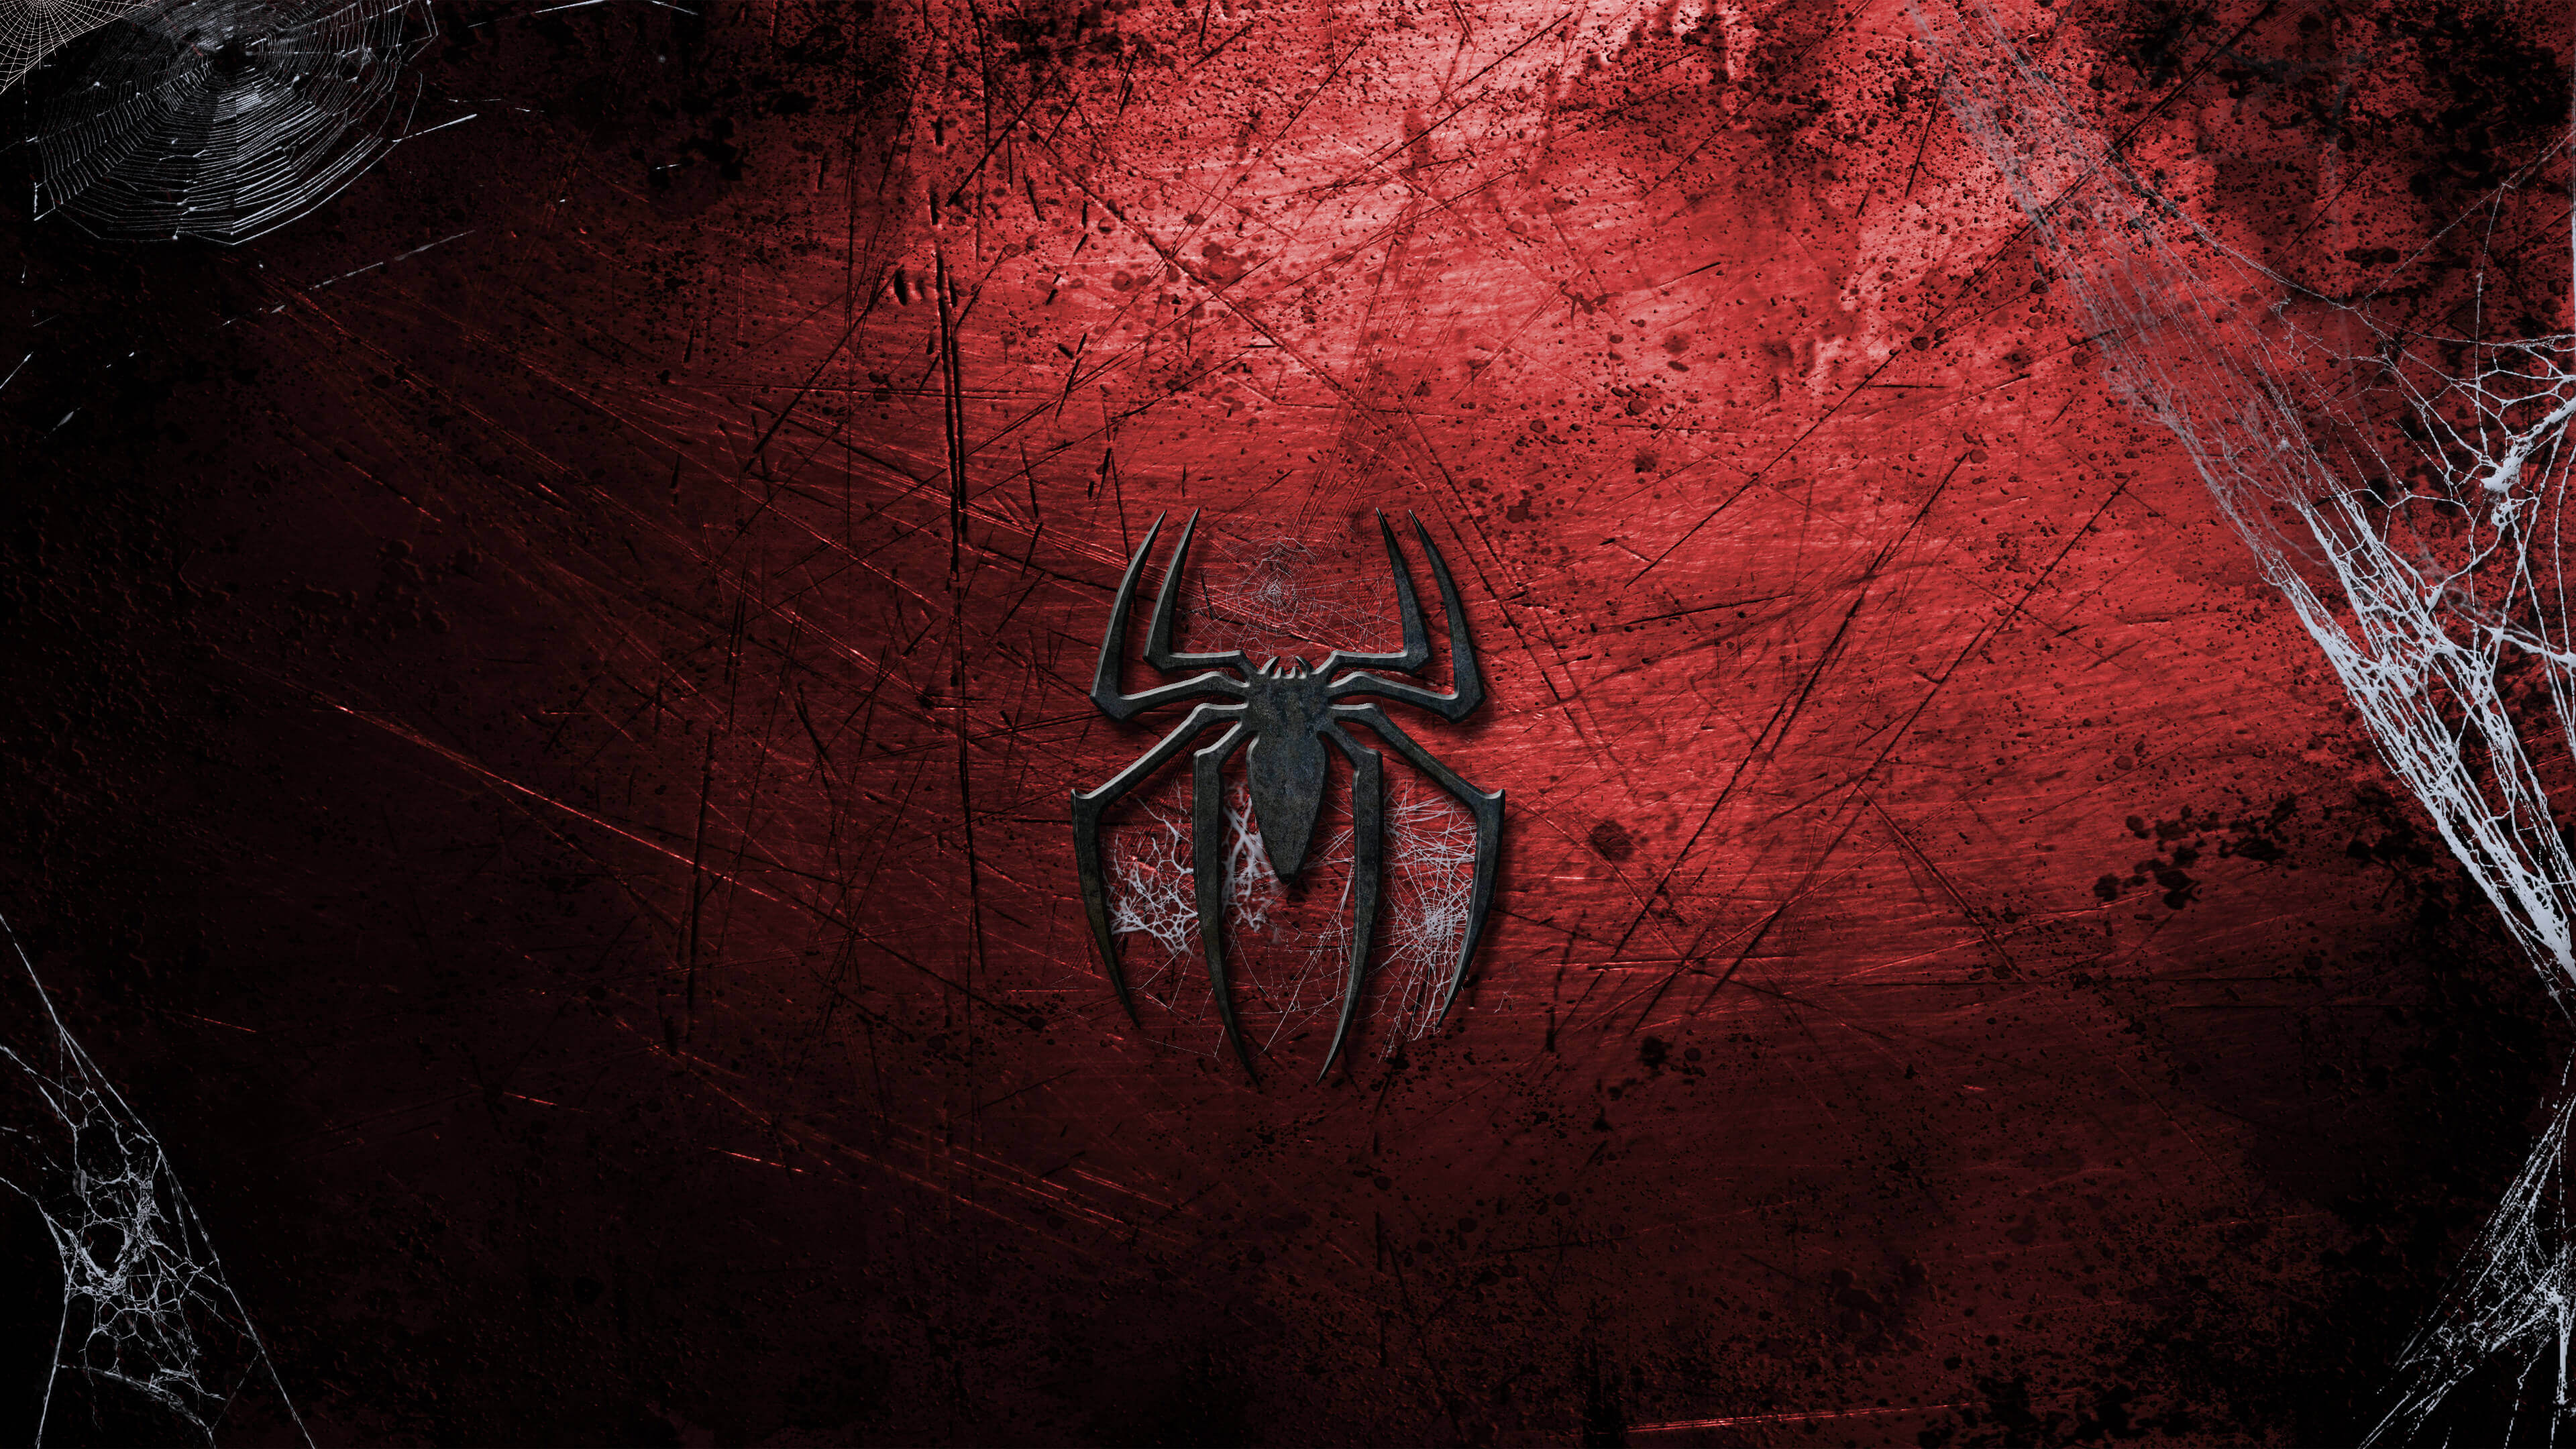 Spider man logo  red and black 4K wallpaper download